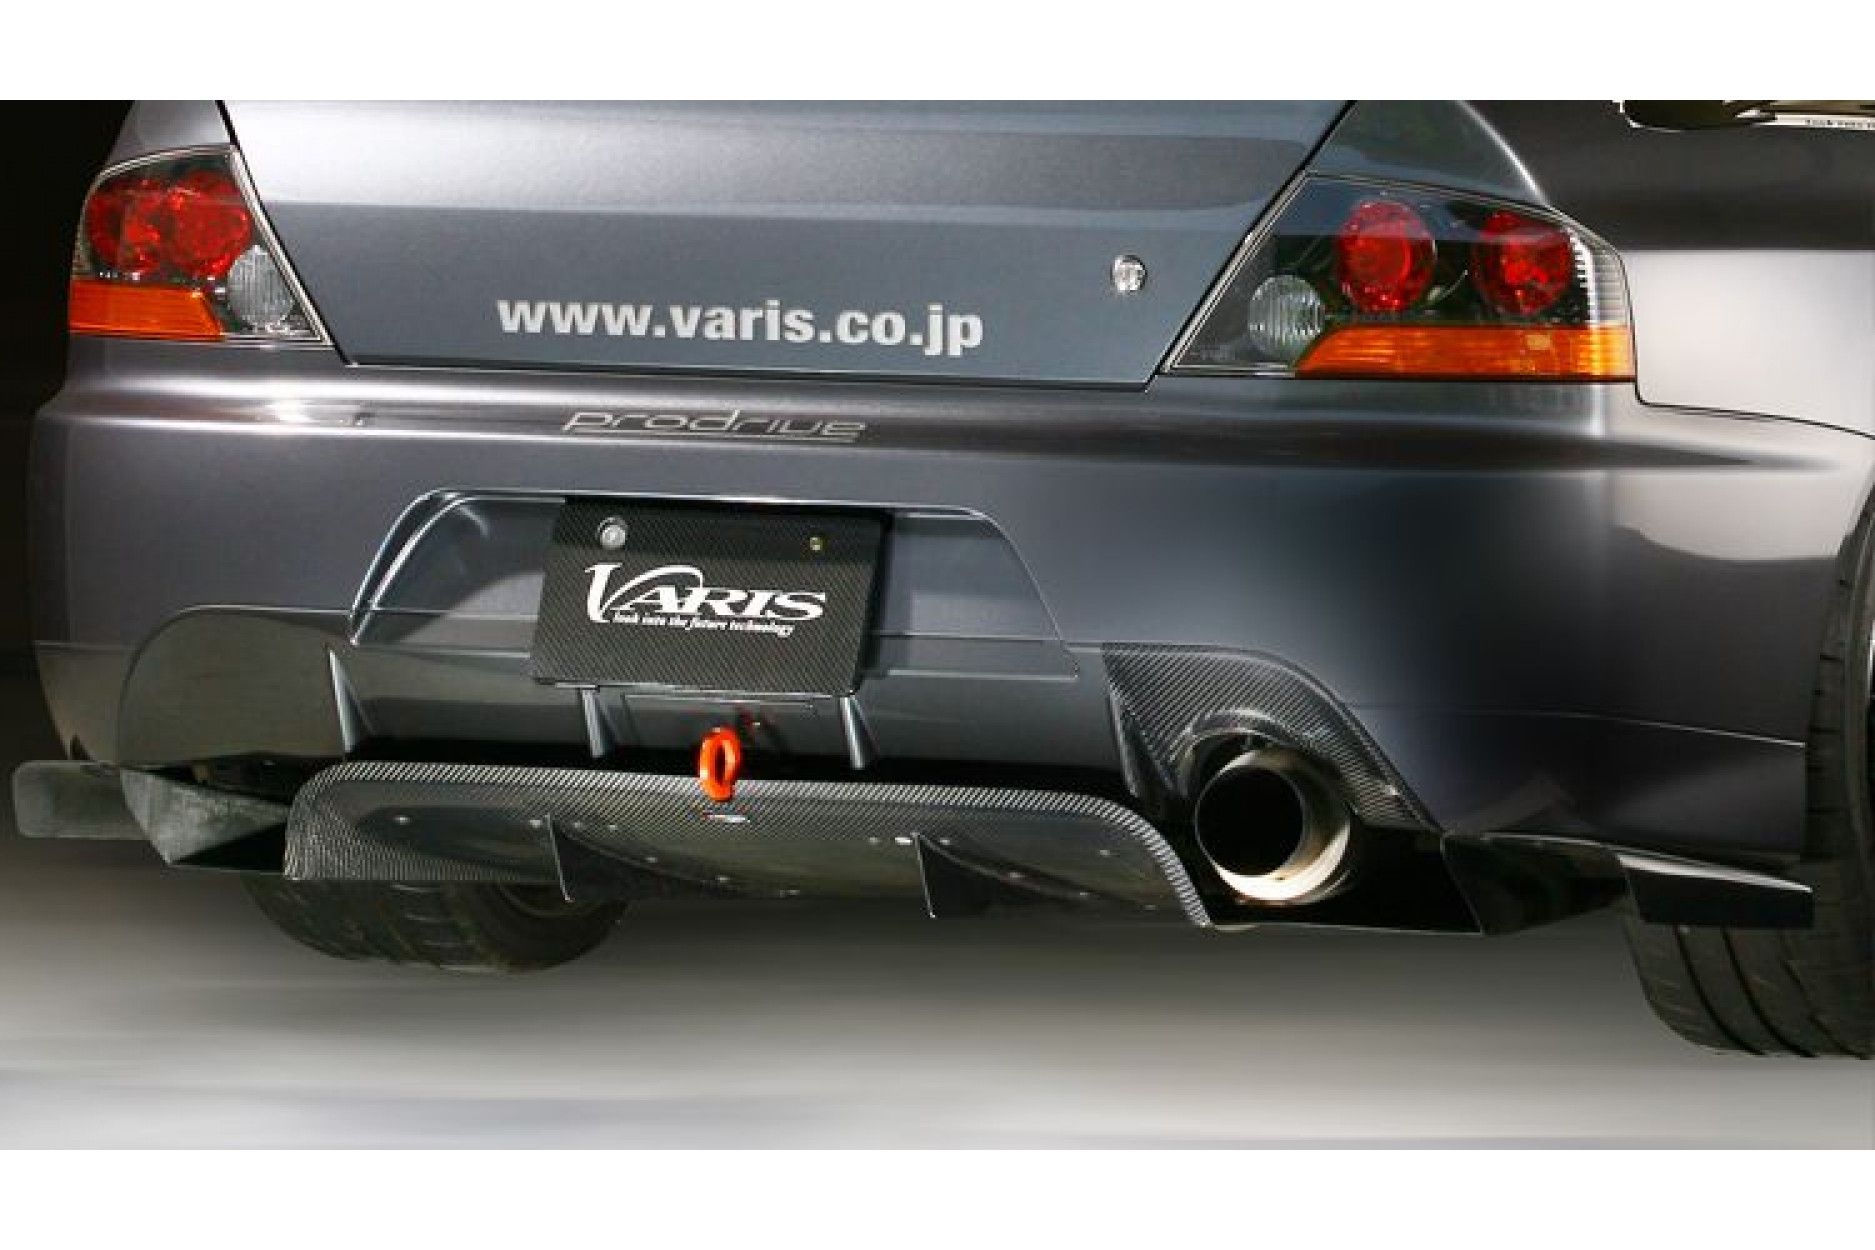 Varis carbon bodykit for Mitsubishi Lancer Evo IX